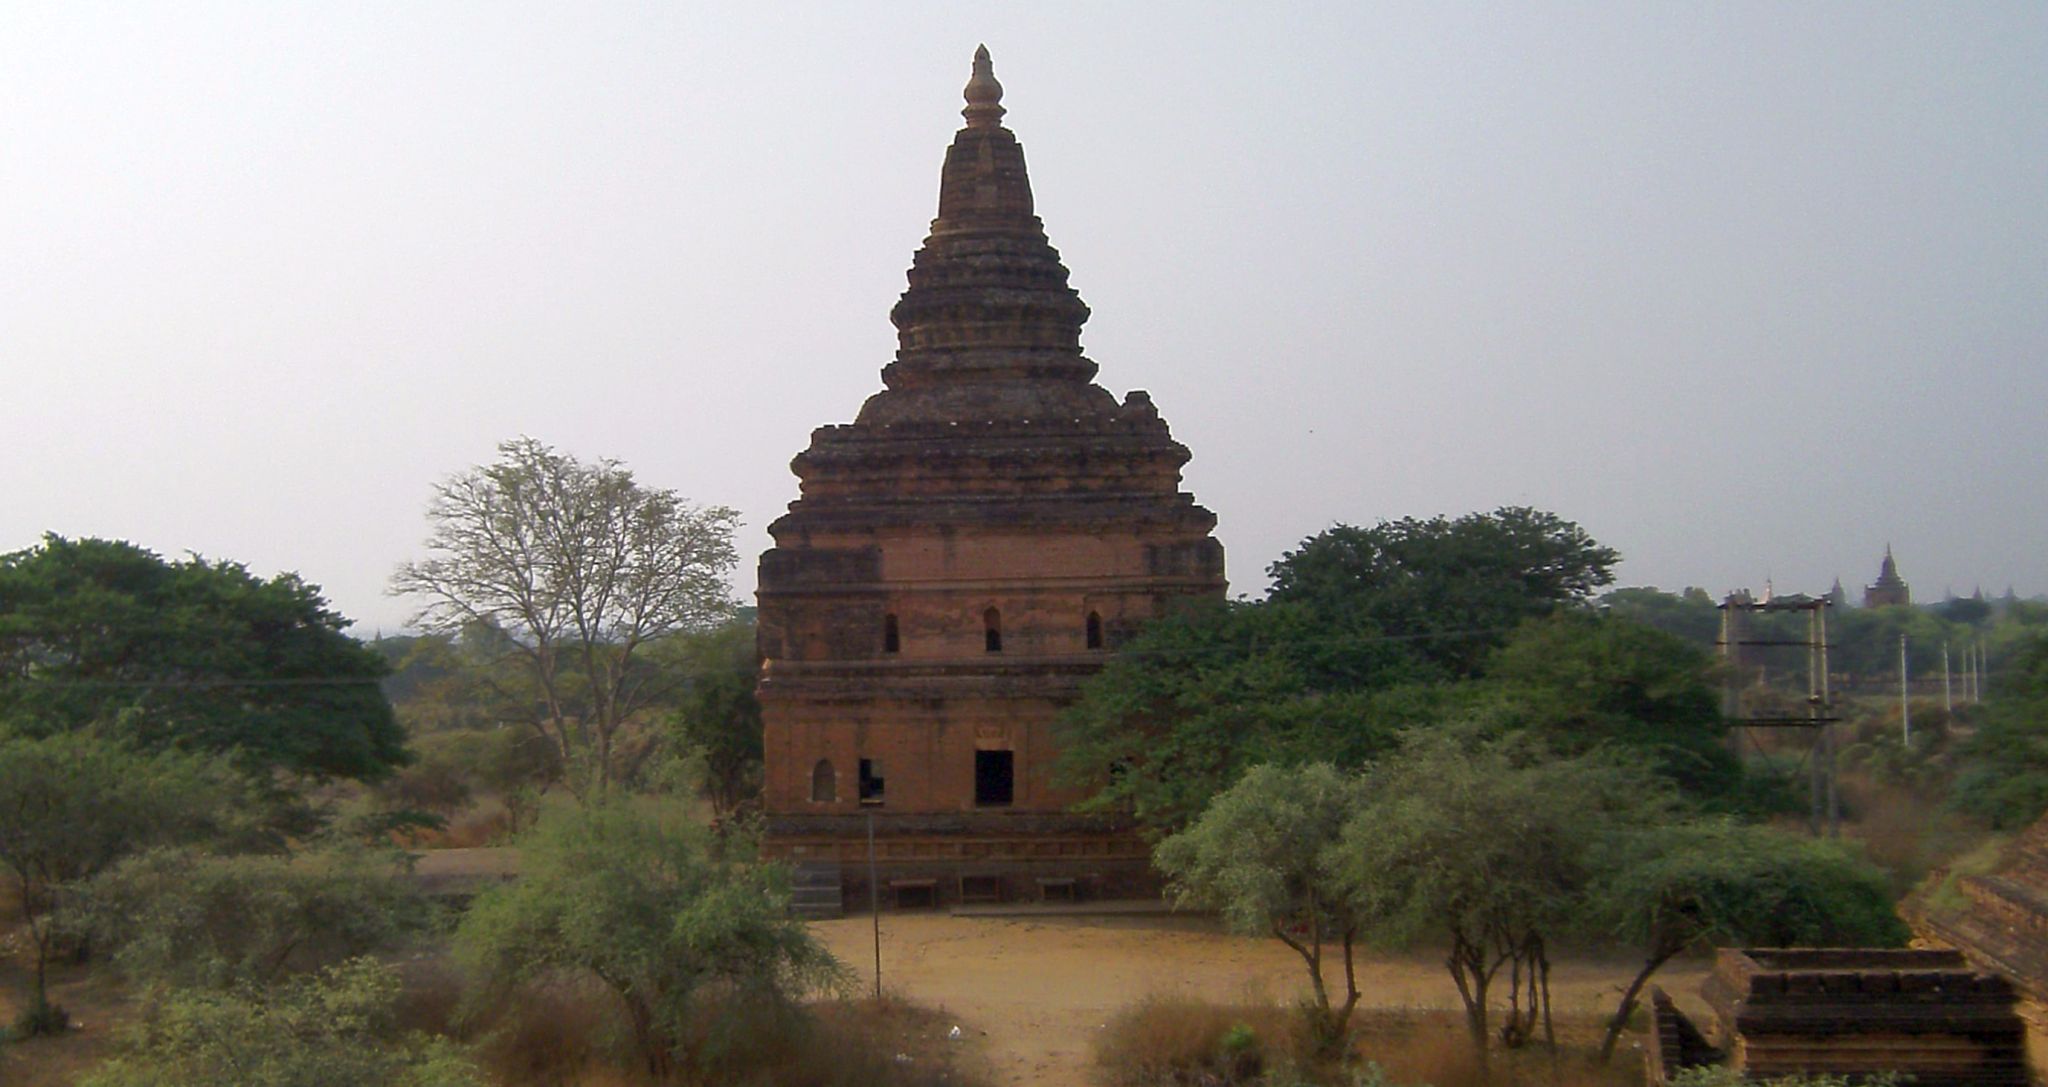 Nathlaung Kyaung Hindu Temple in Old Bagan in central Myanmar / Burma